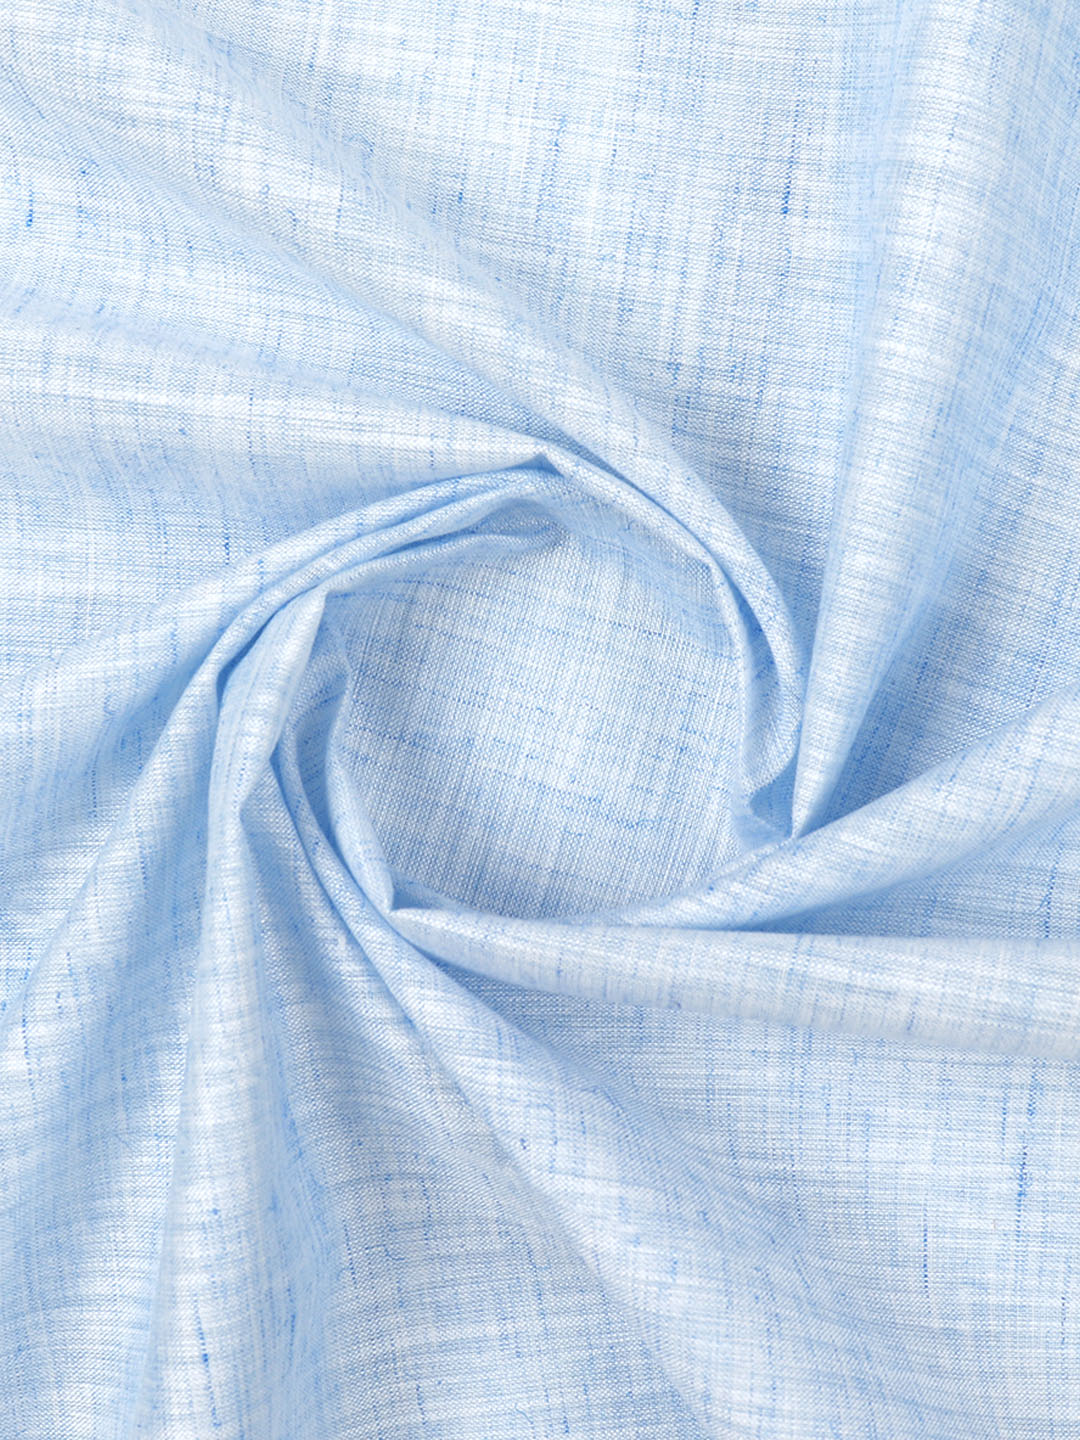 Cotton Plain Blue Colour Shirt Fabric High Style